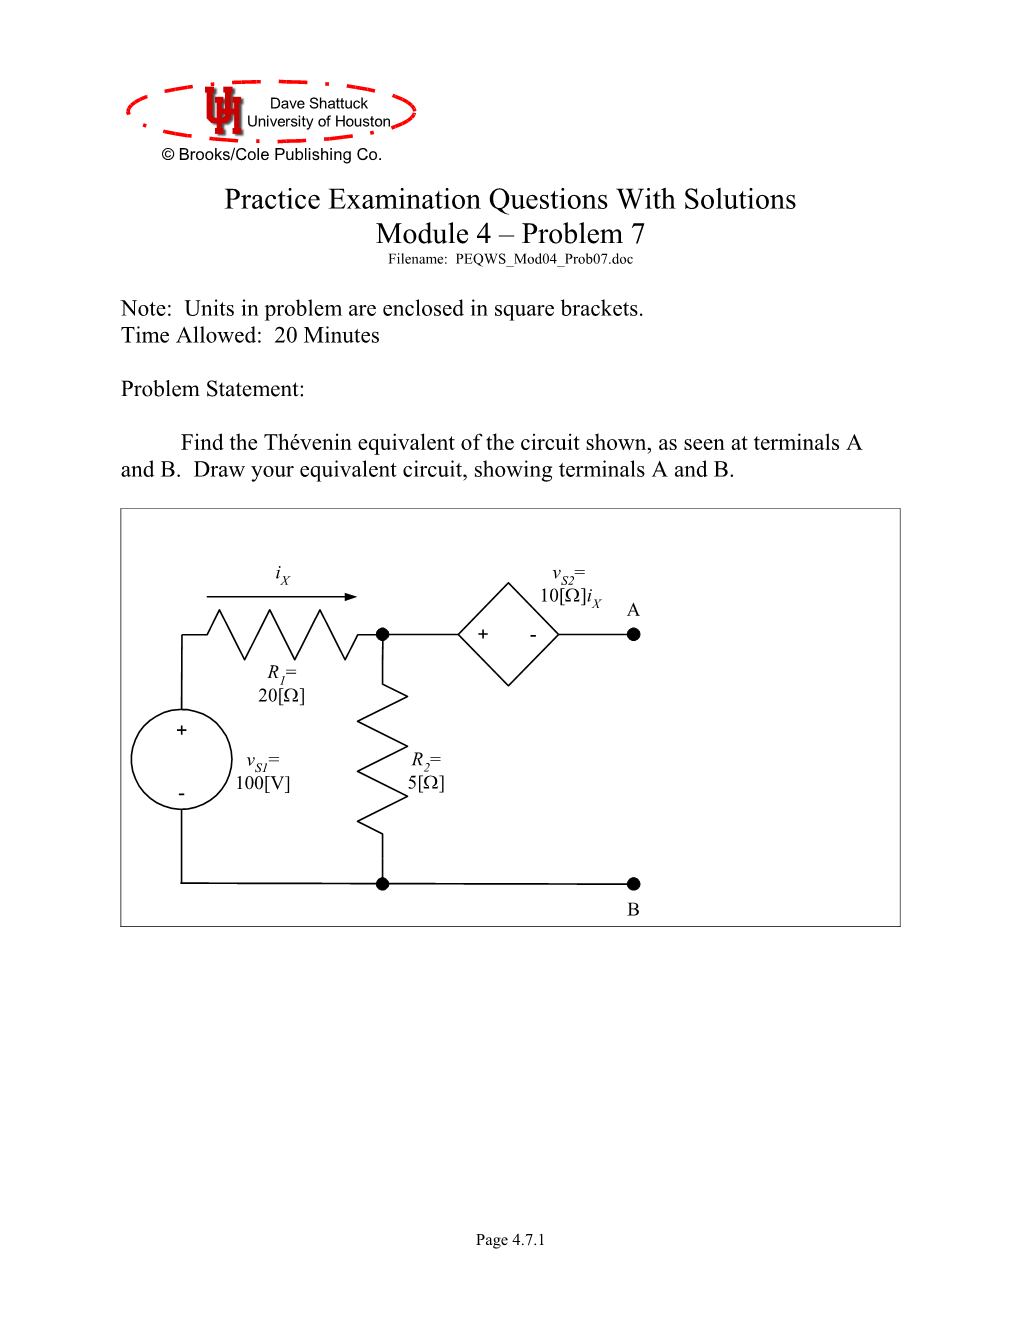 Practice Examination Module 4 Problem 7